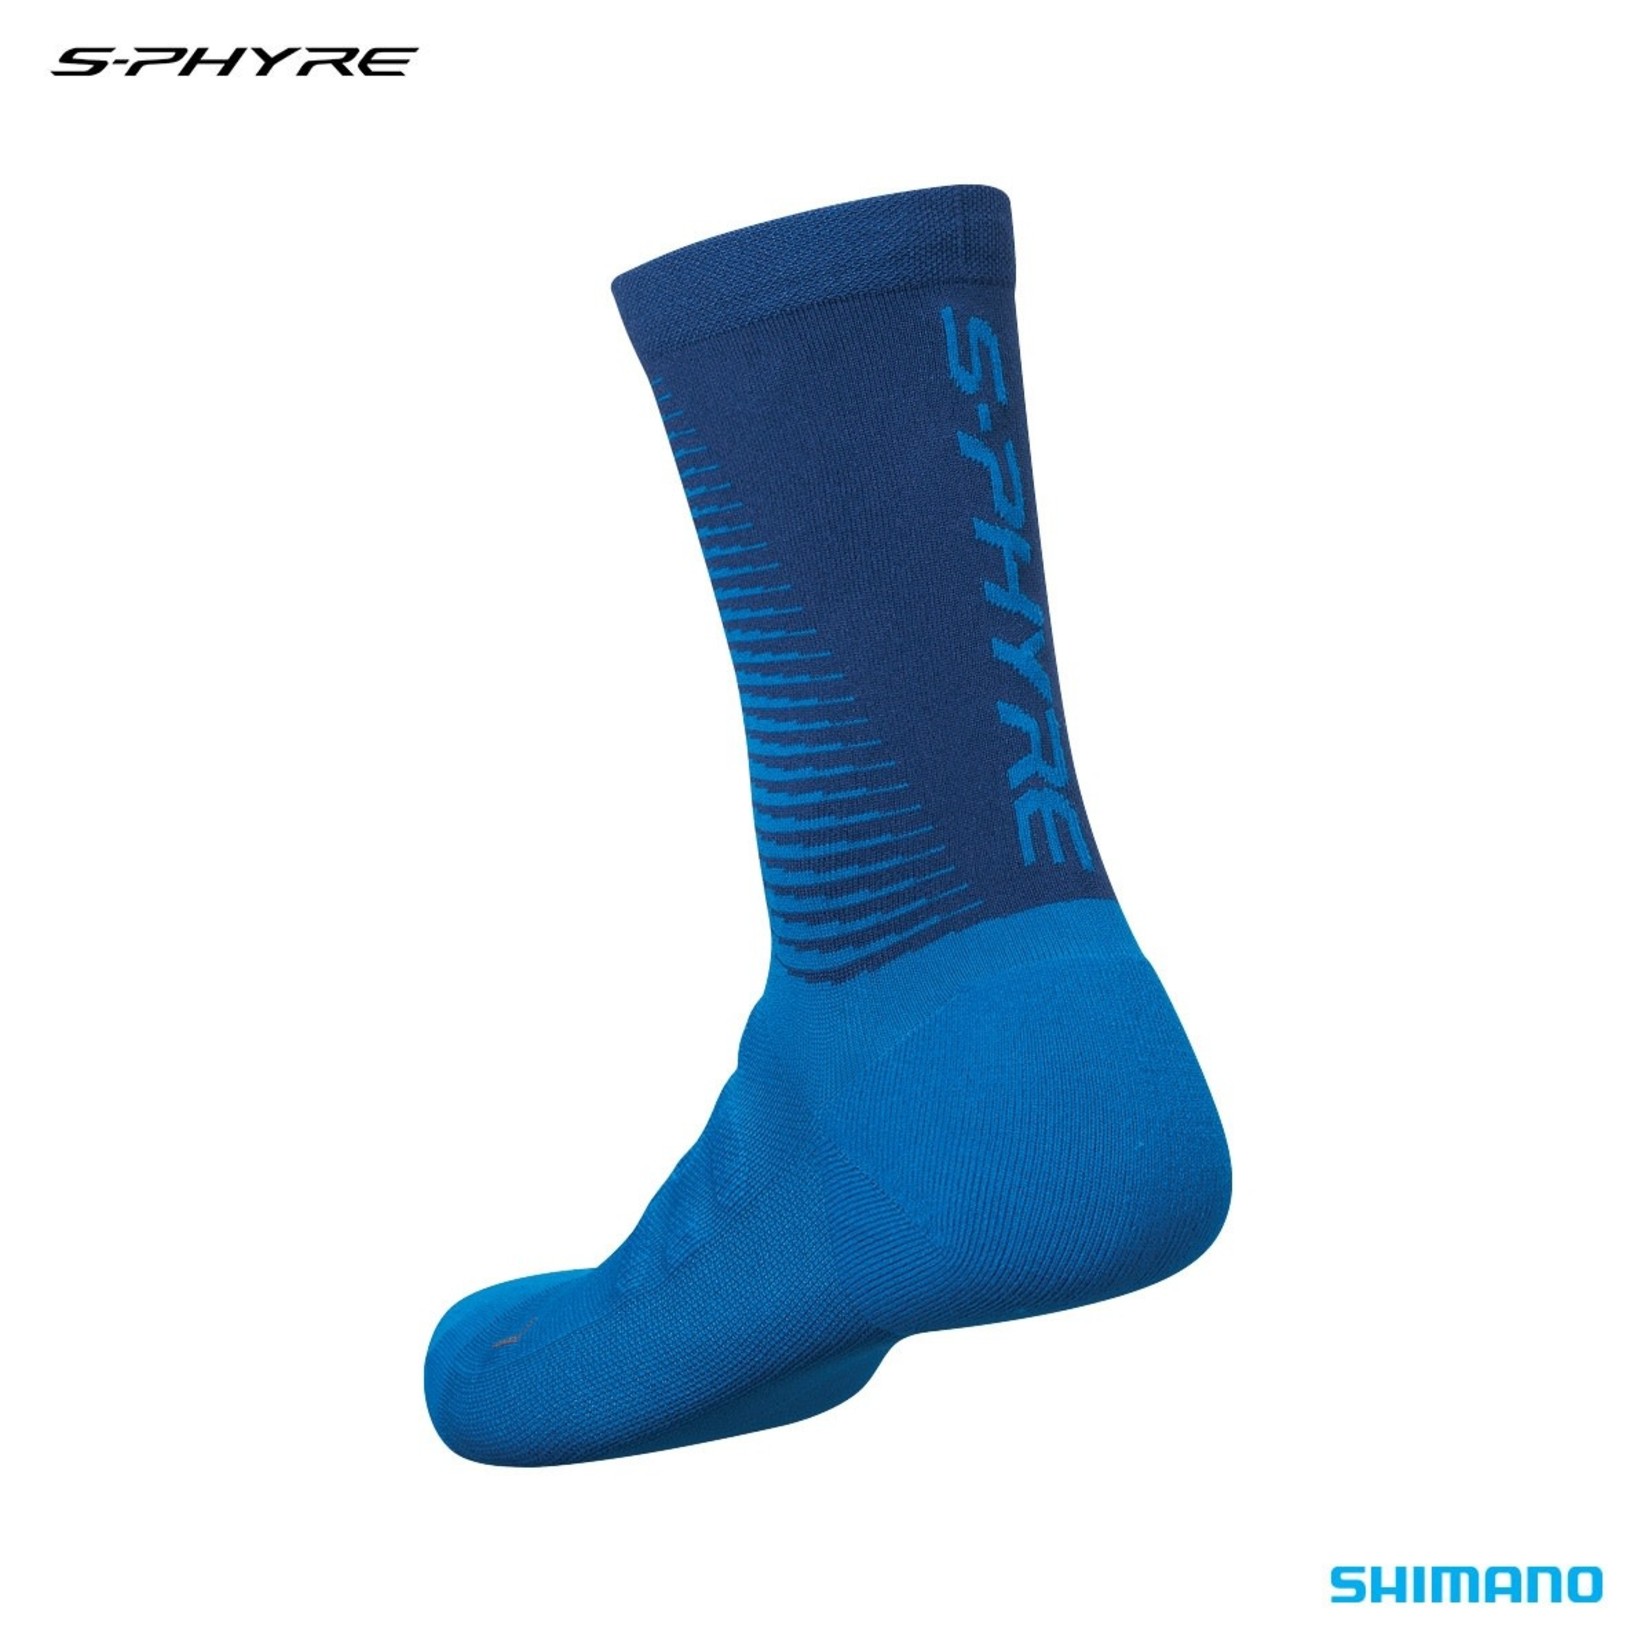 Shimano Shimano S-Phyre Tall Socks - Blue Navy